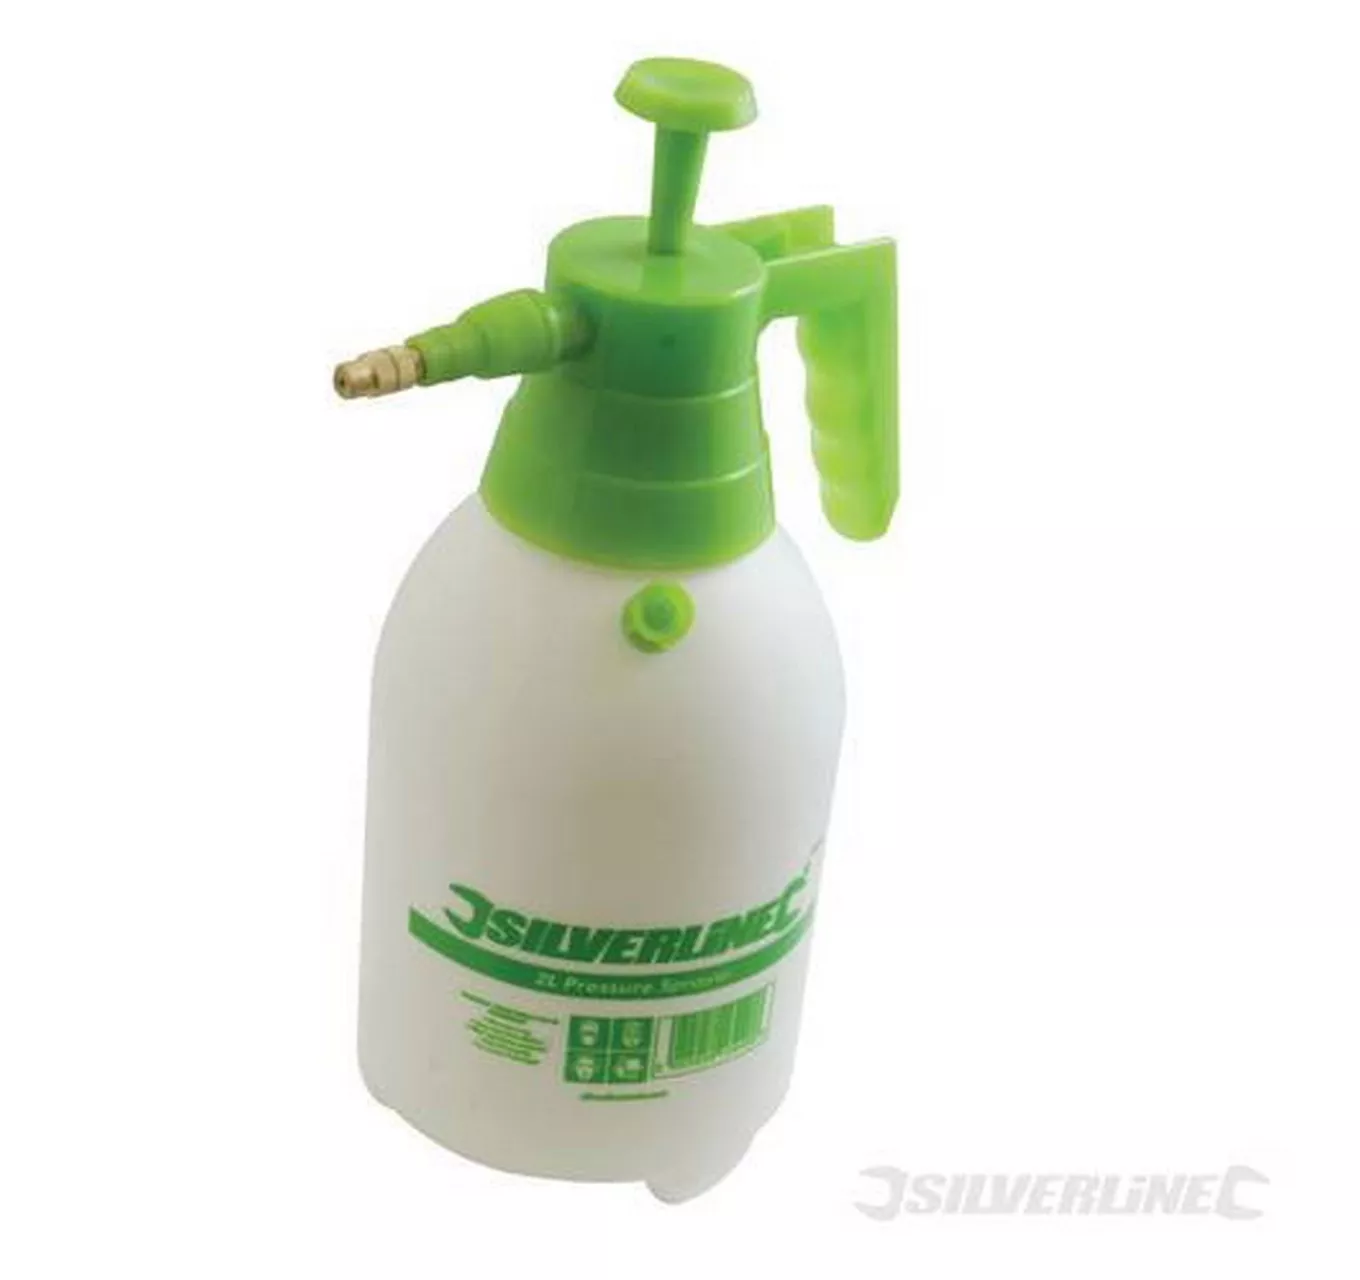 2ltr Pressure Sprayer